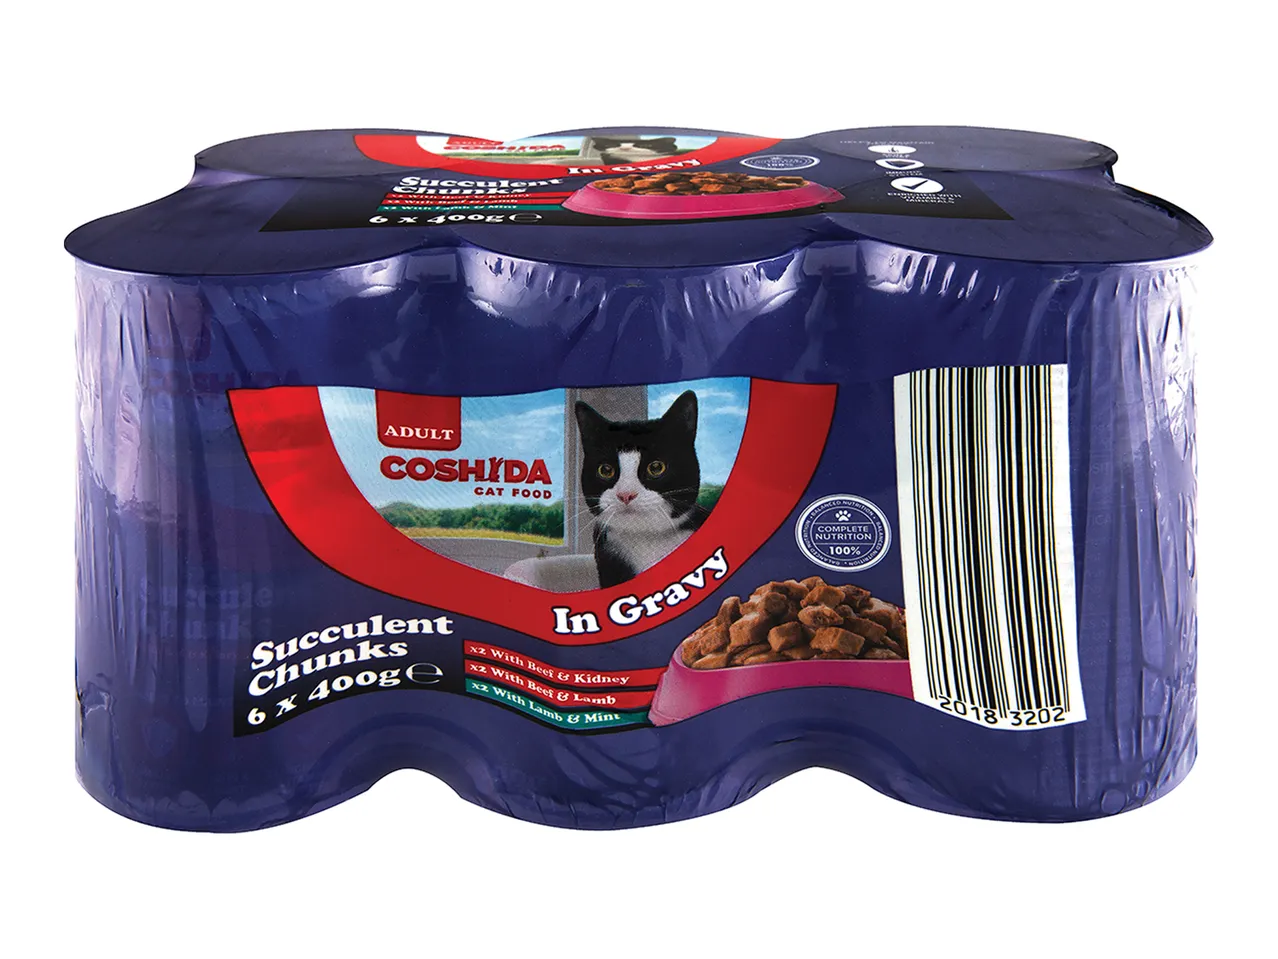 Go to full screen view: Coshida Premium Cat Food Chunks - Image 2